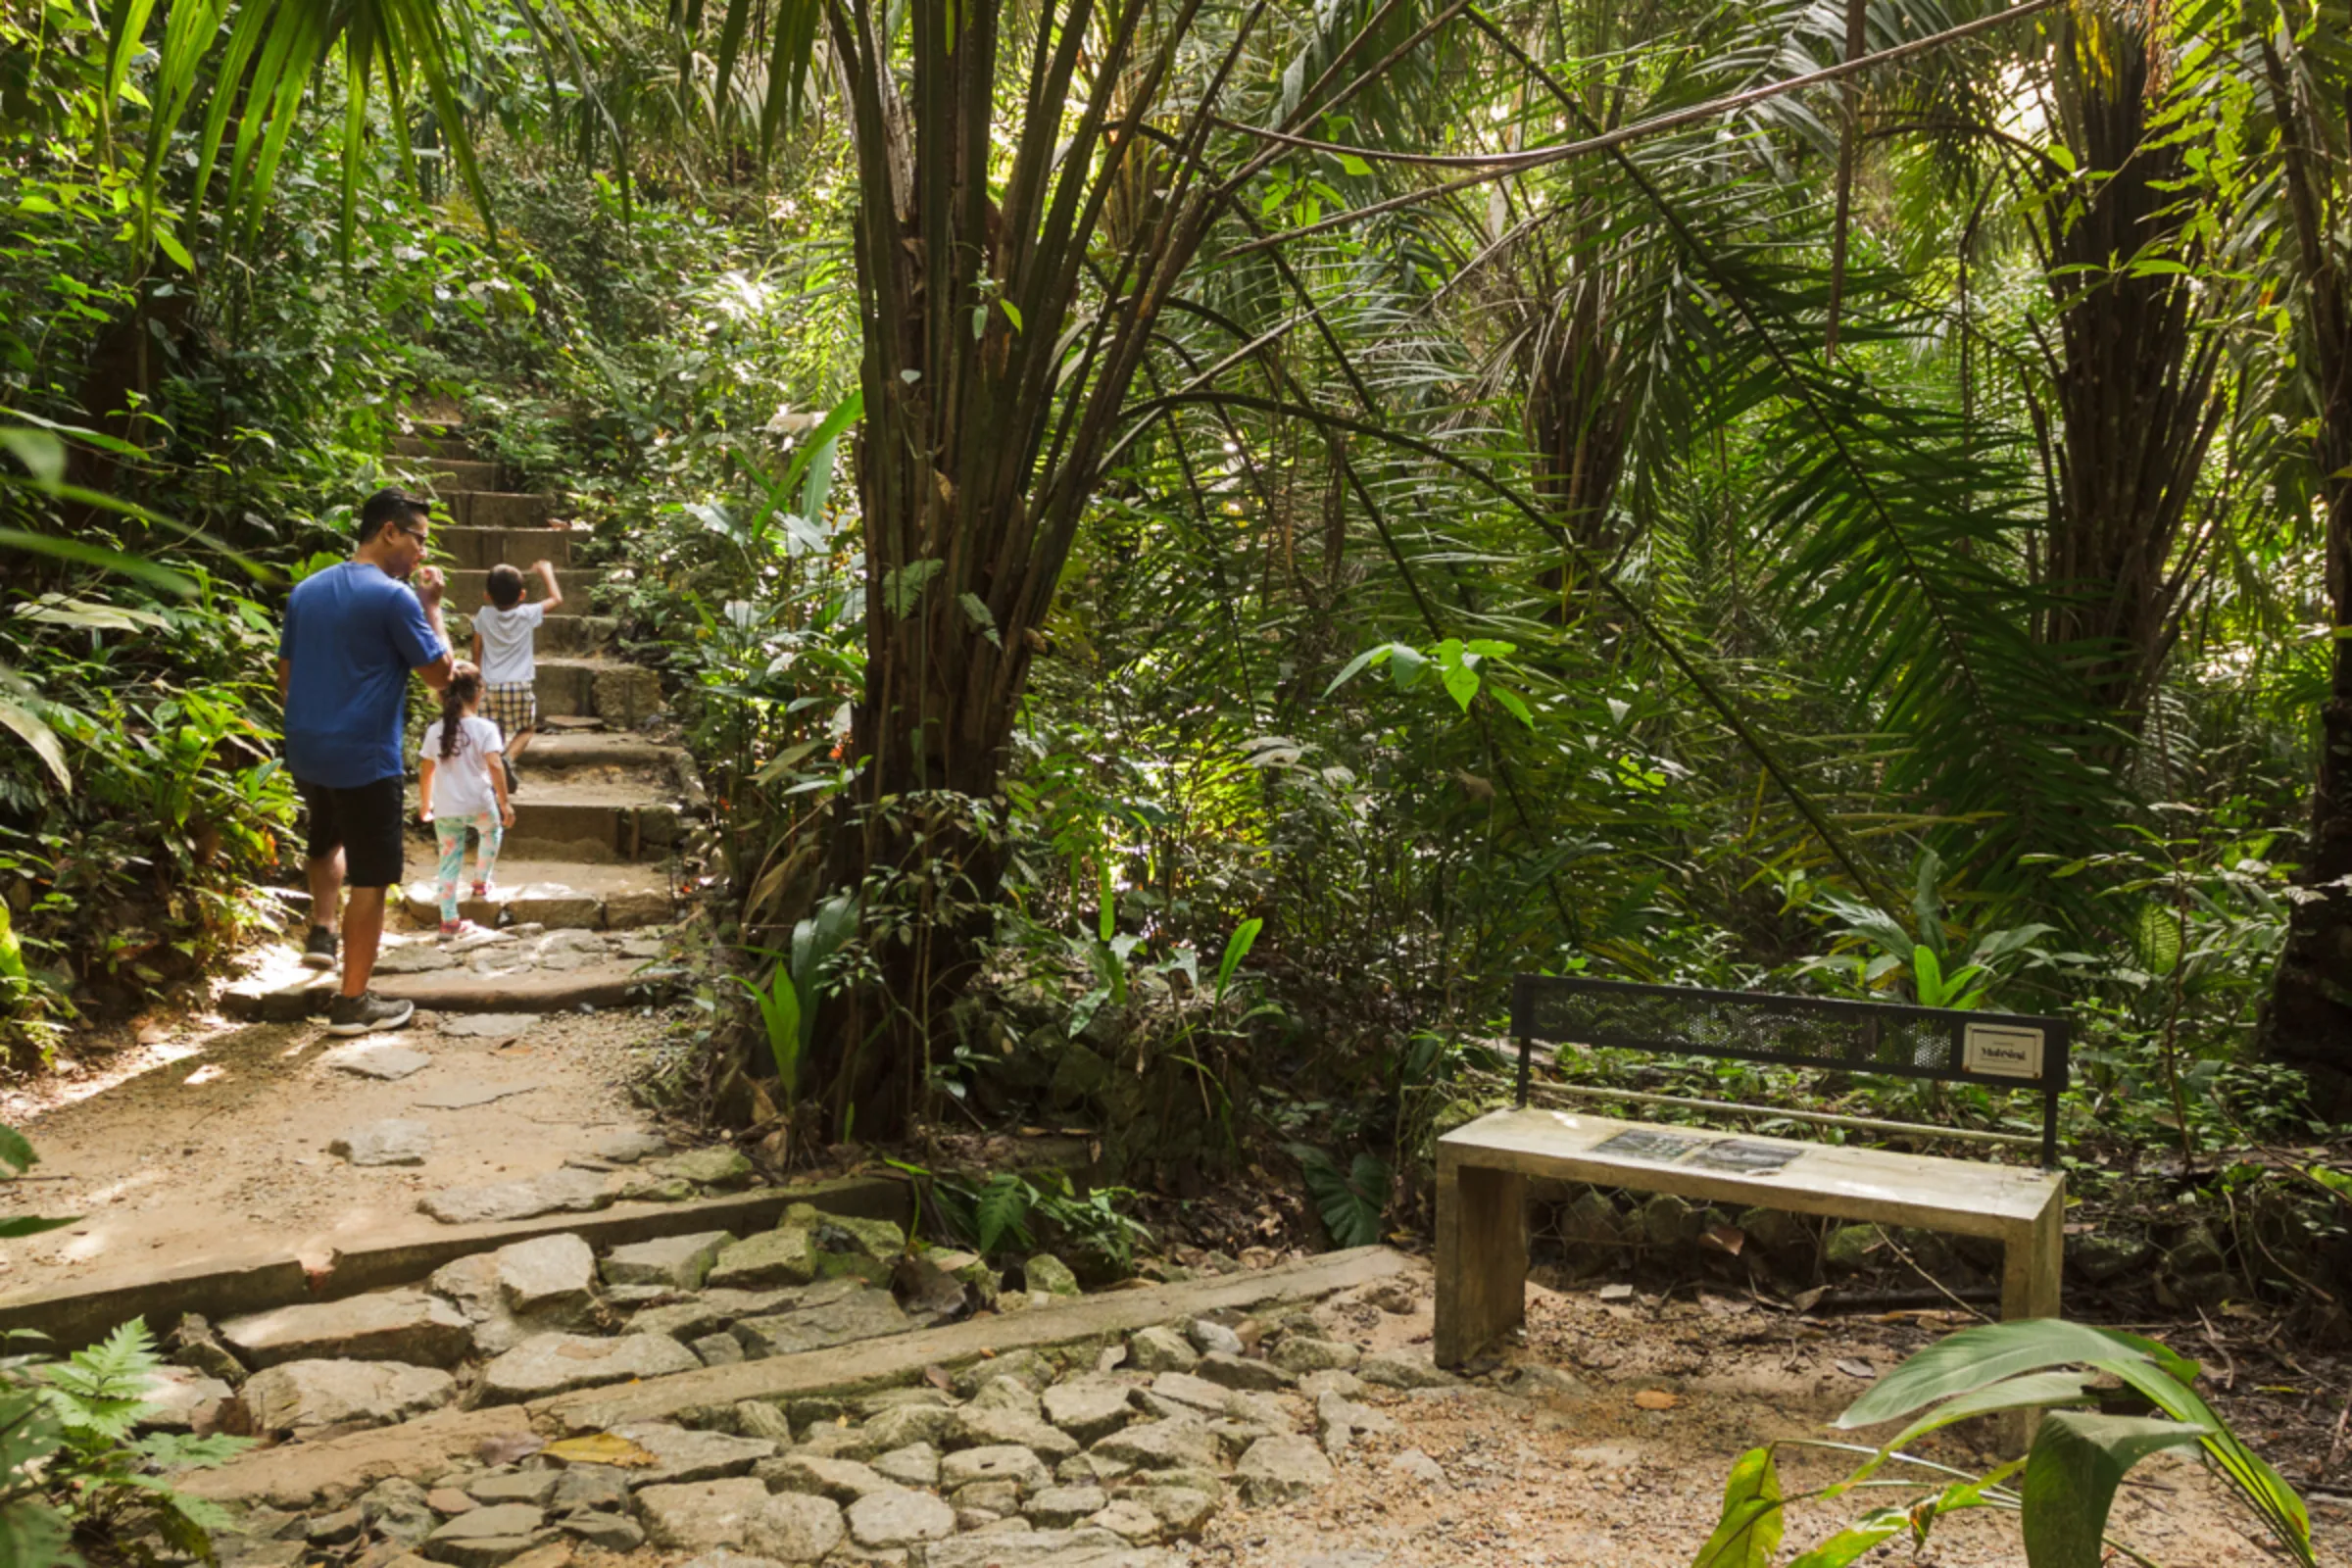 Visitors walk through Kuala Lumpur's Taman Tugu tropical forest park